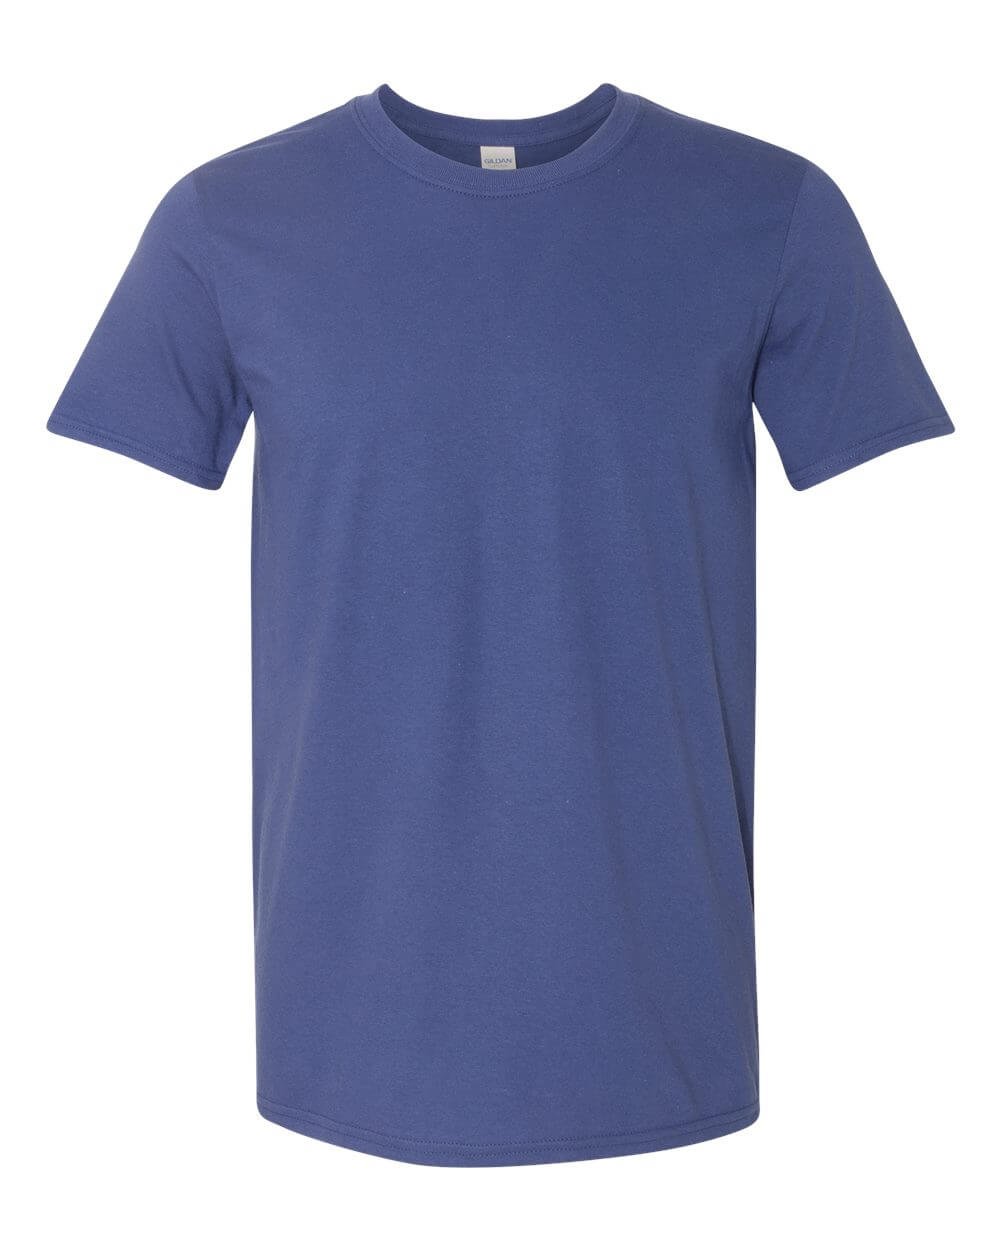 Playera azul 100% algodón, hombre, Grande, Foset, Camisetas, 60420